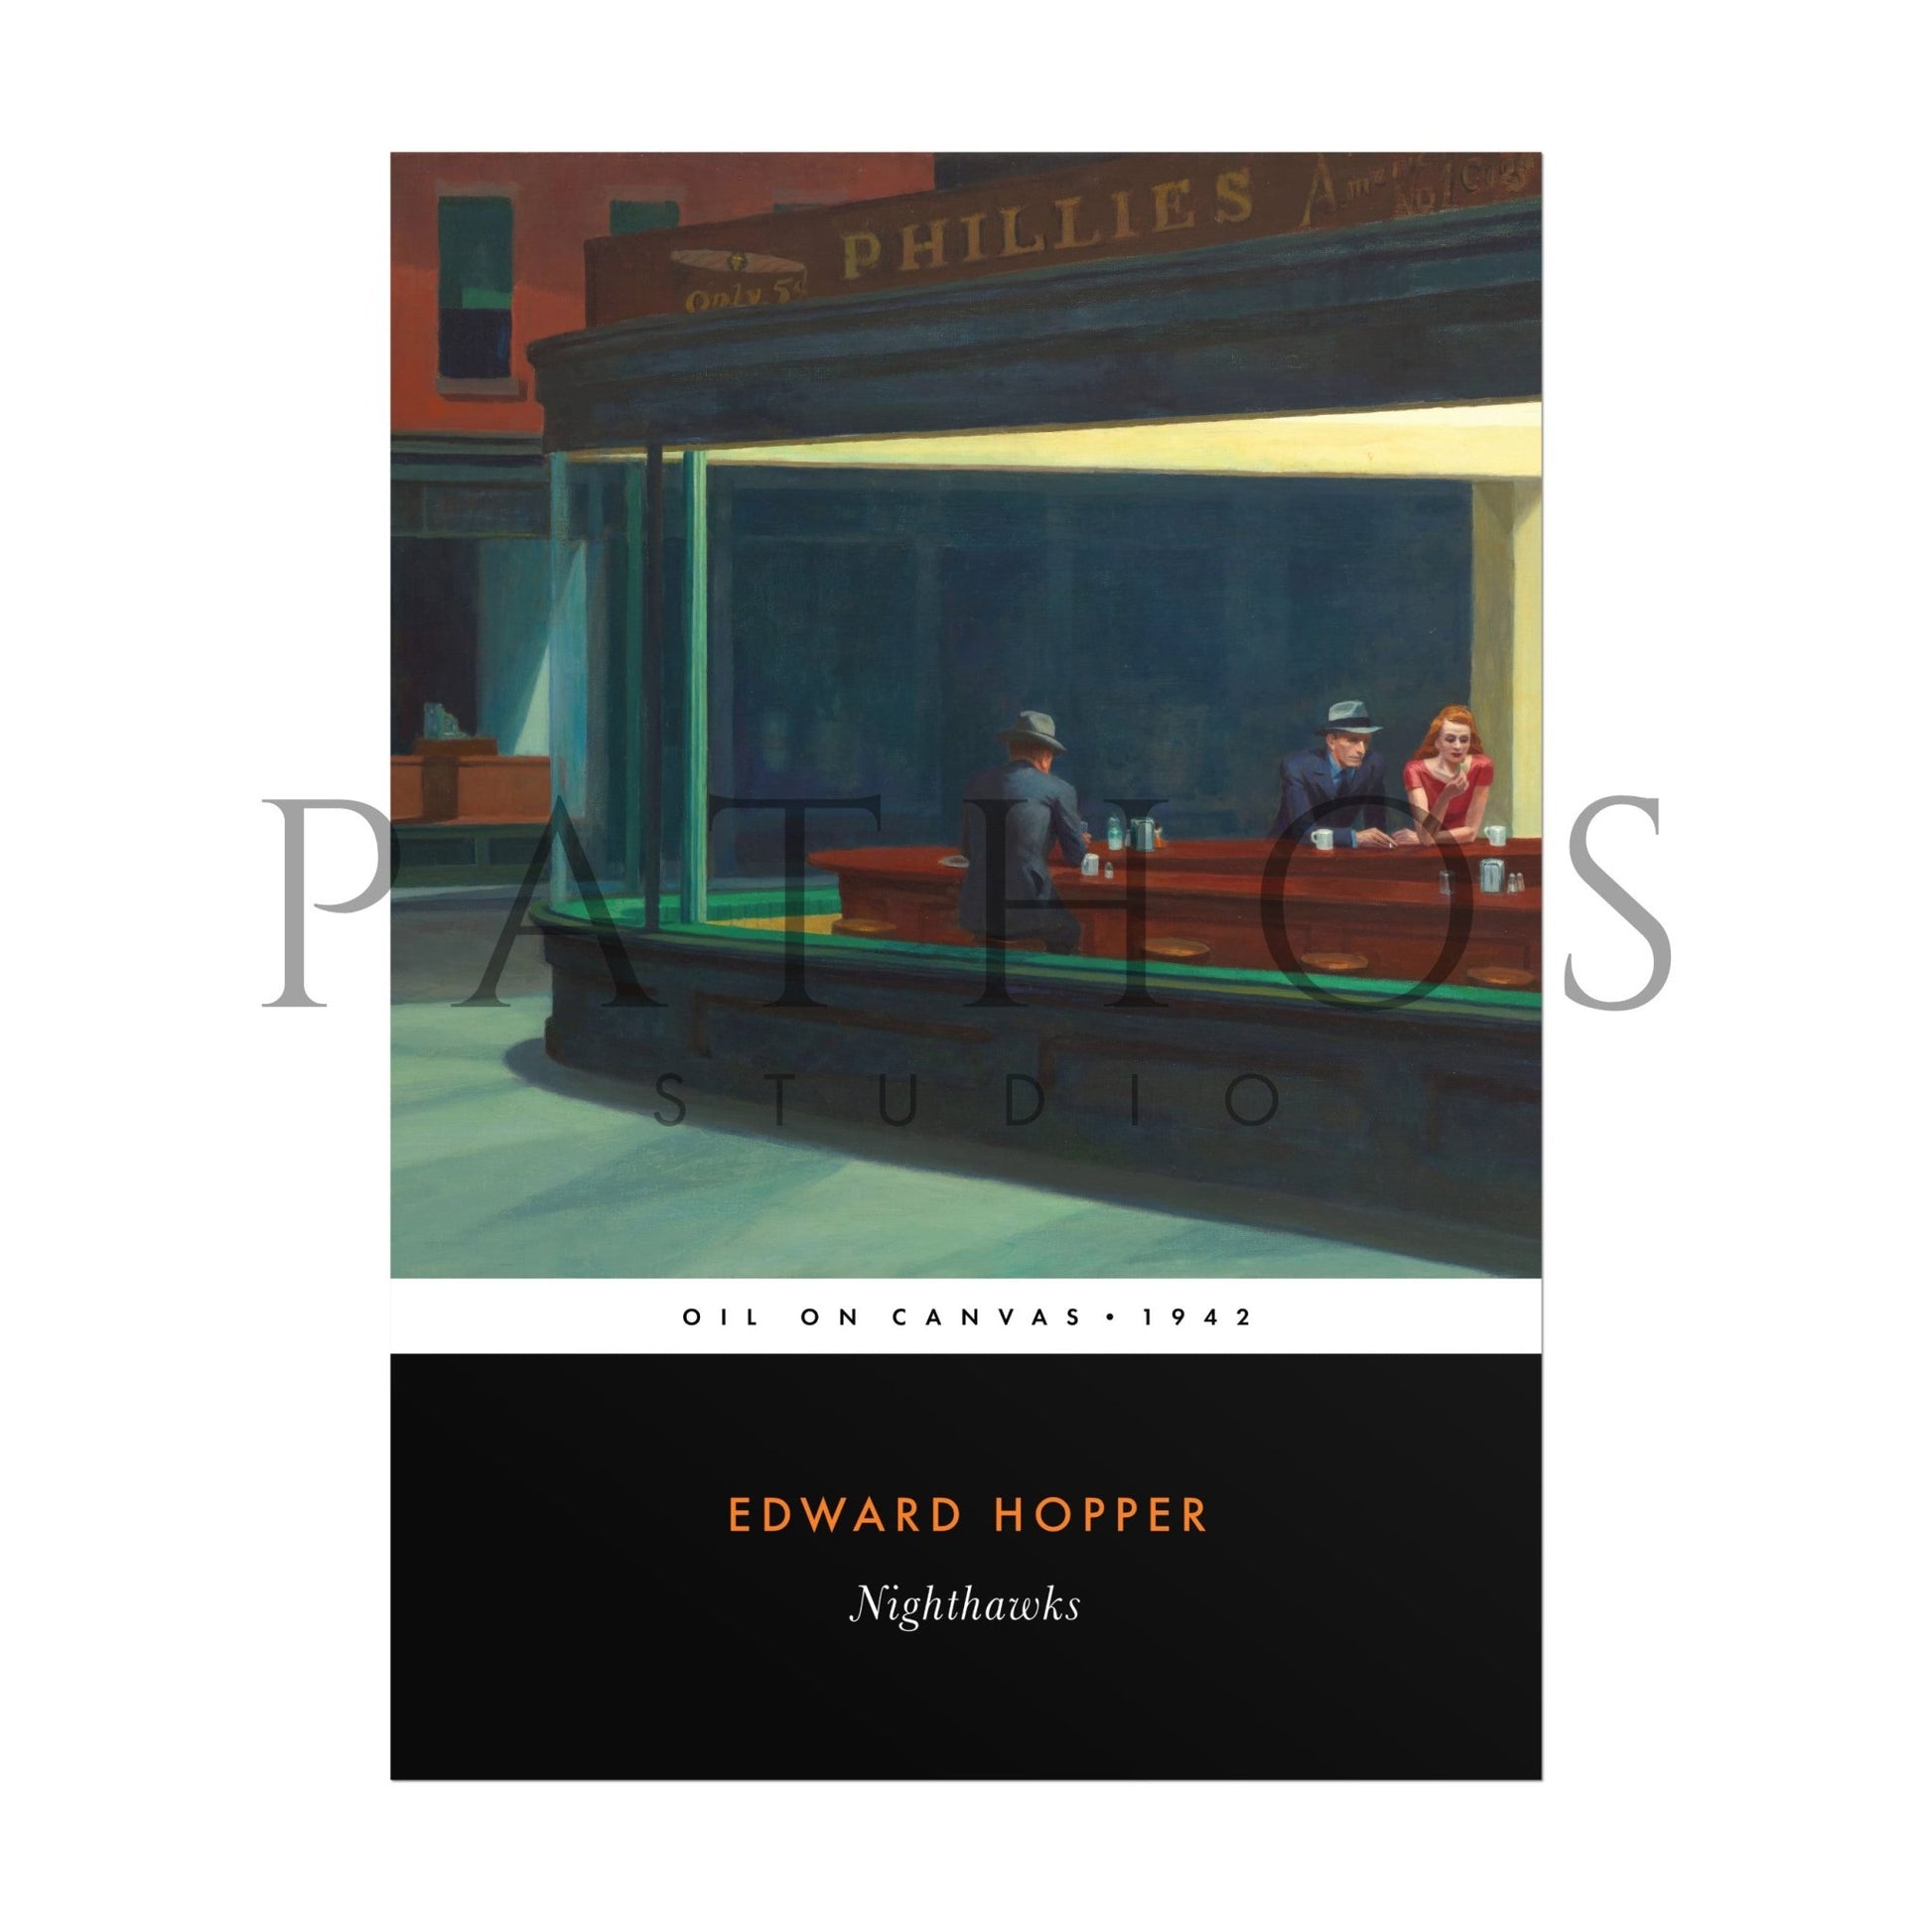 EDWARD HOPPER - Nighthawks (Vintage Classic Style) - Pathos Studio - Art Prints